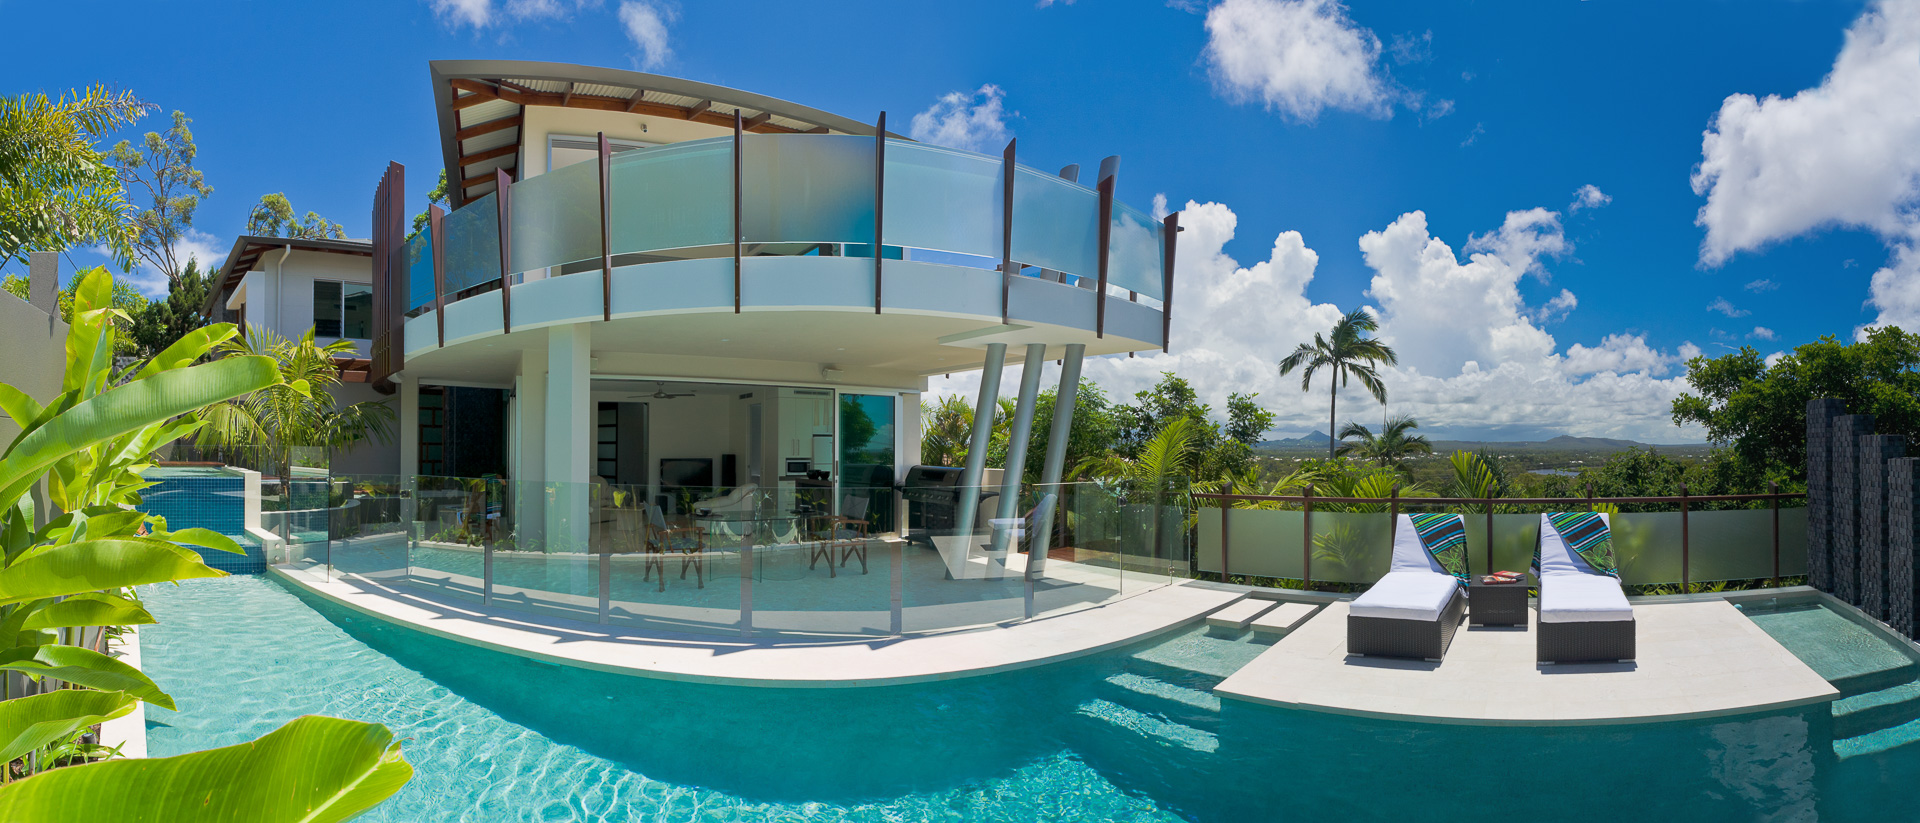 Resort Style Modern House, beach house, pool, chris clout, minka joinery